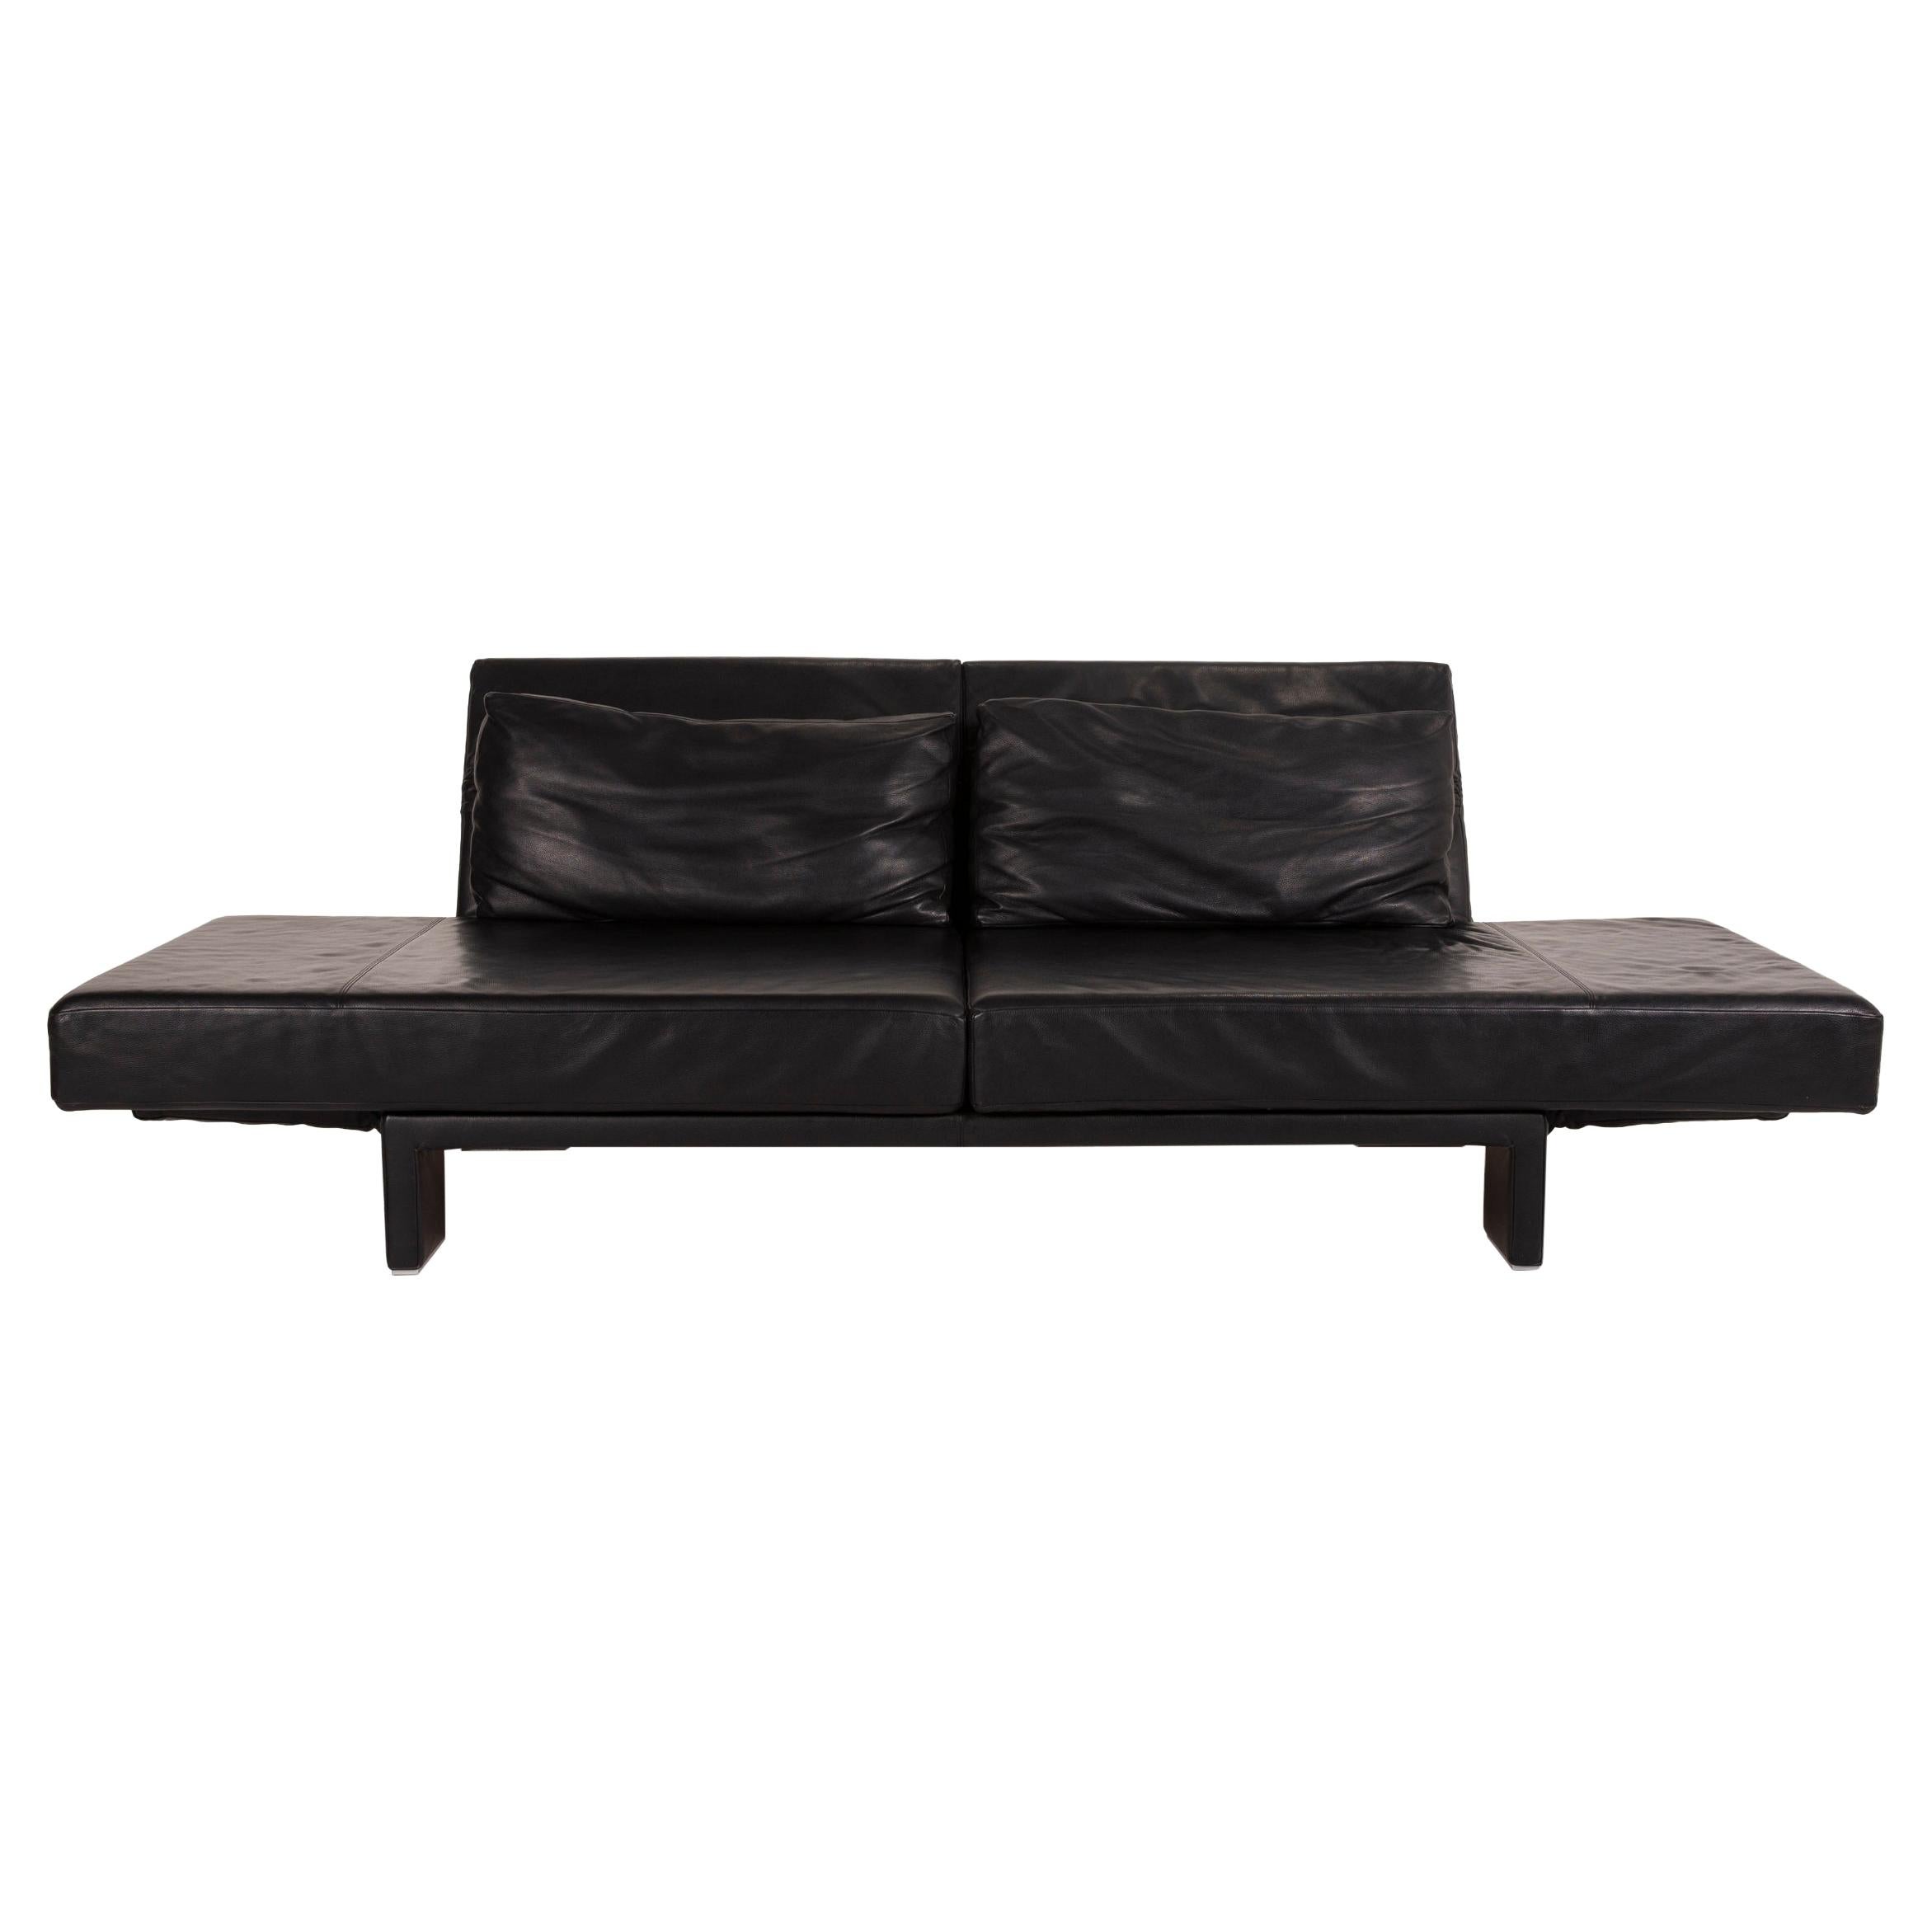 Franz Fertig Scene Leather Sofa Black Reclining Function For Sale